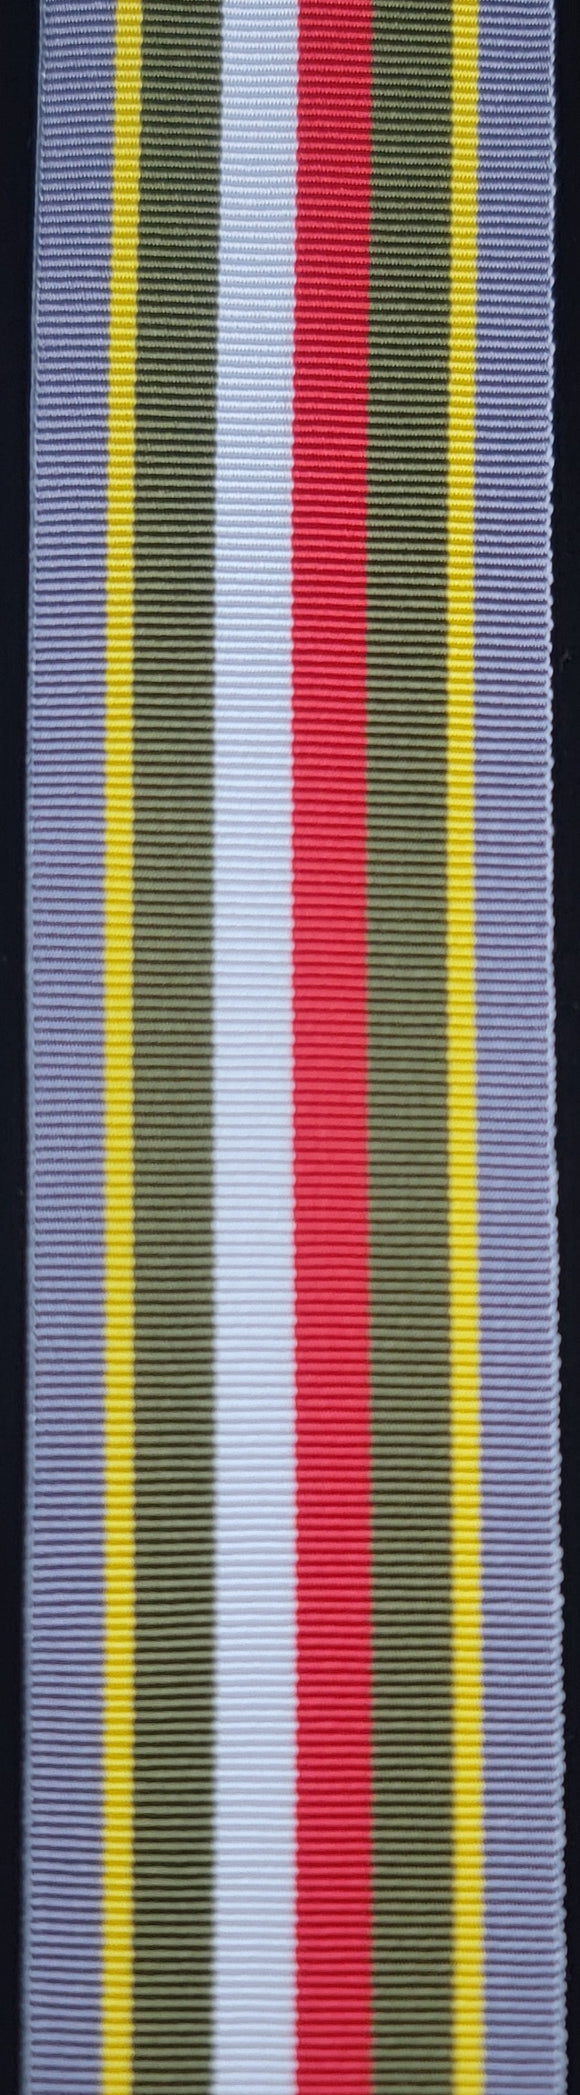 Ribbon, Polish Army Medal